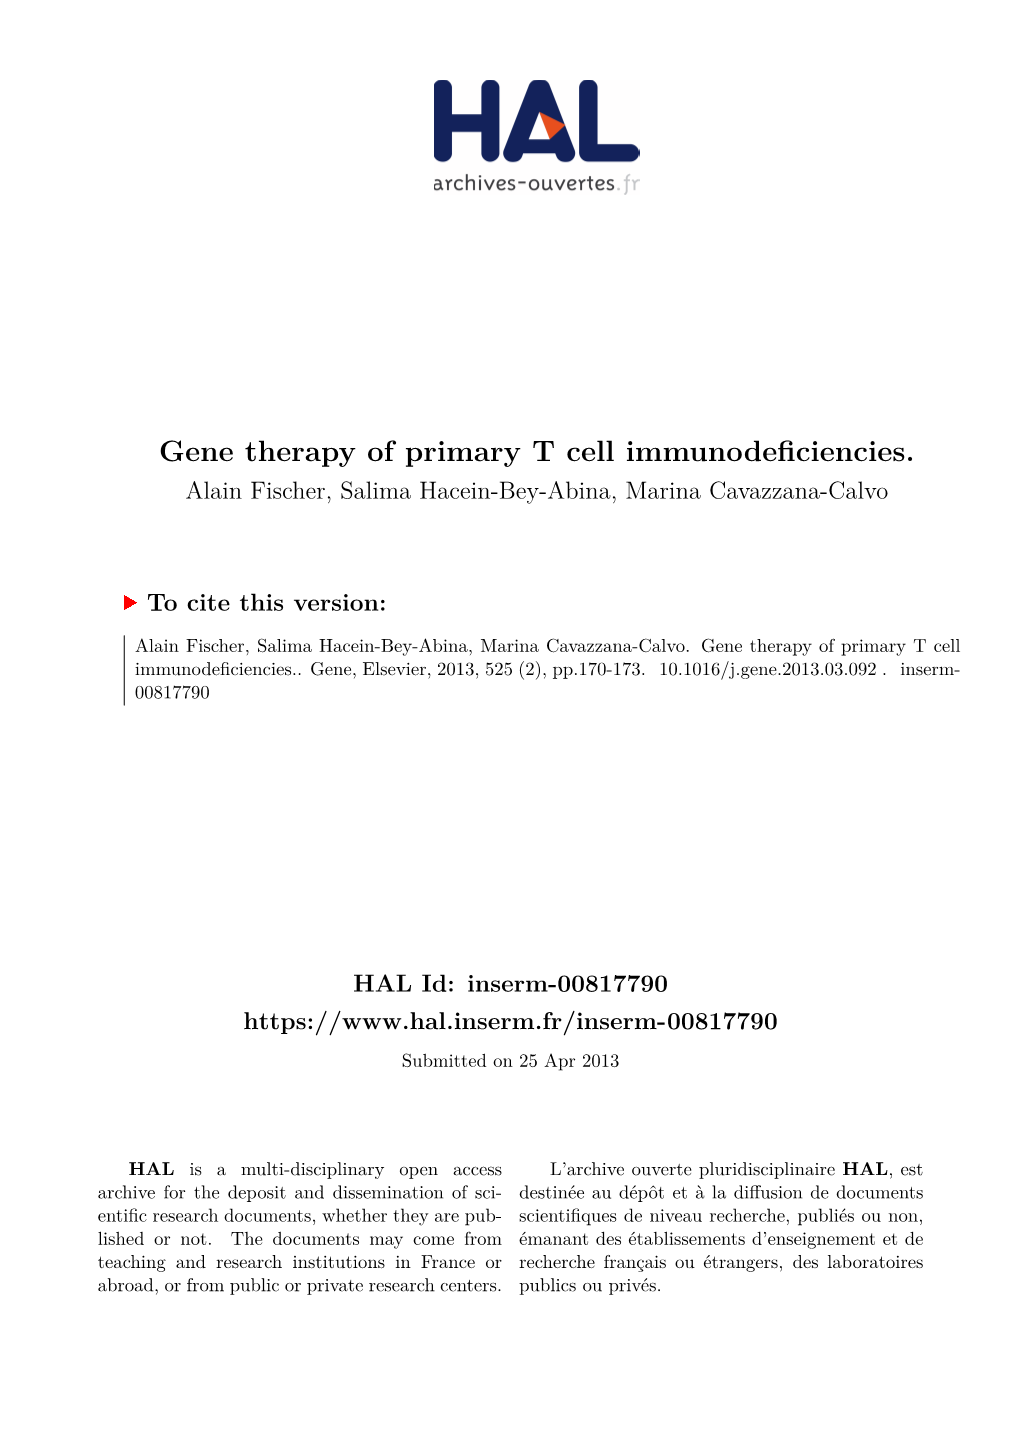 Gene Therapy of Primary T Cell Immunodeficiencies. Alain Fischer, Salima Hacein-Bey-Abina, Marina Cavazzana-Calvo